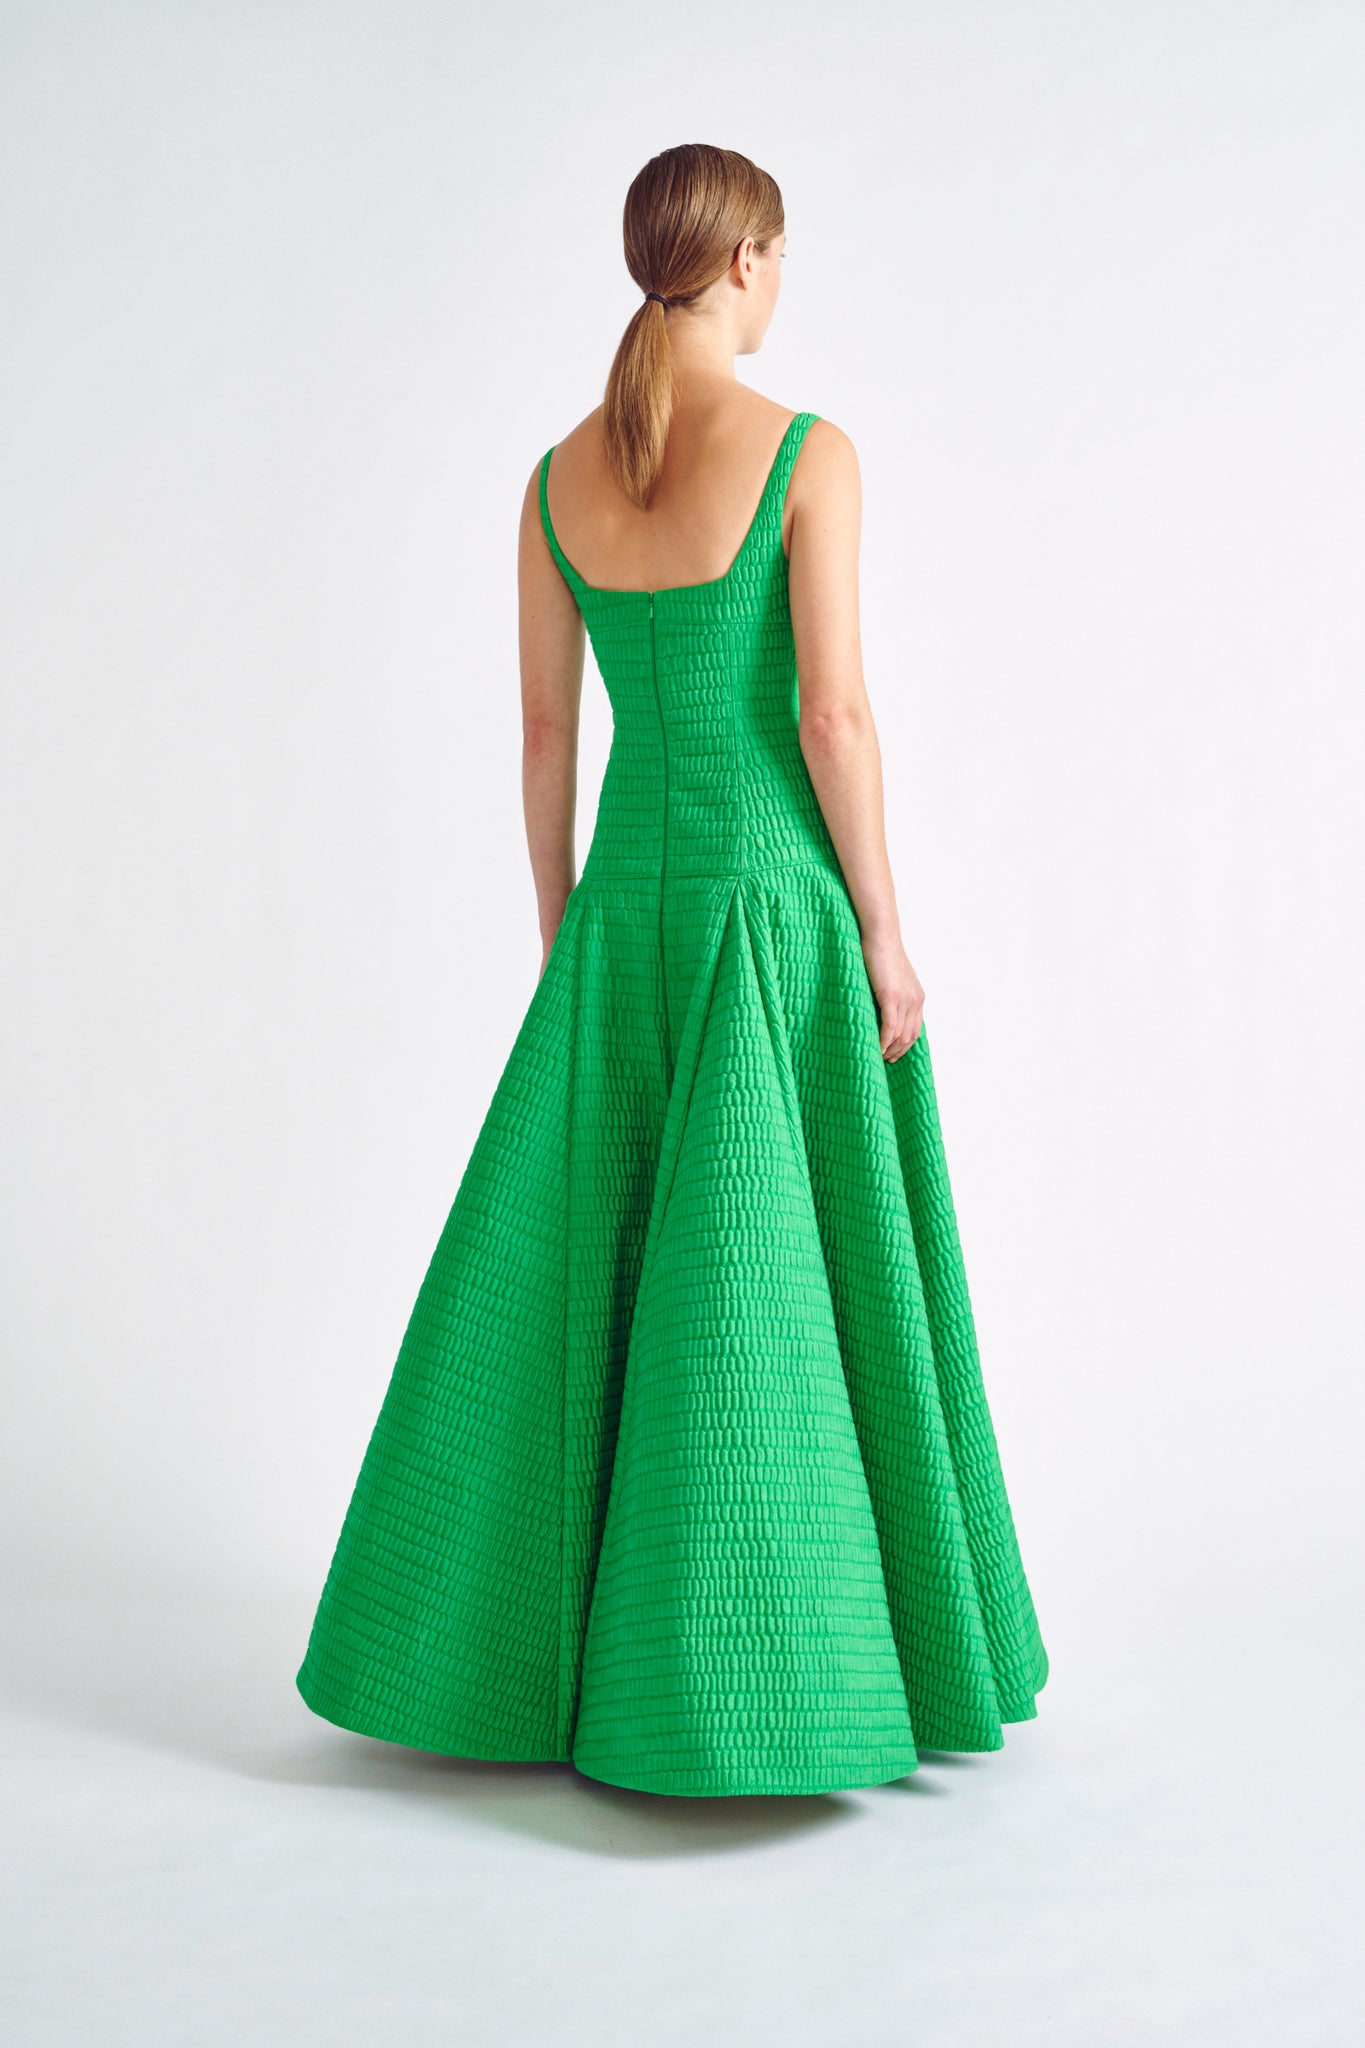 Gwendaline Gown | Green Croc Jacquard Evening Gown | Emilia Wickstead